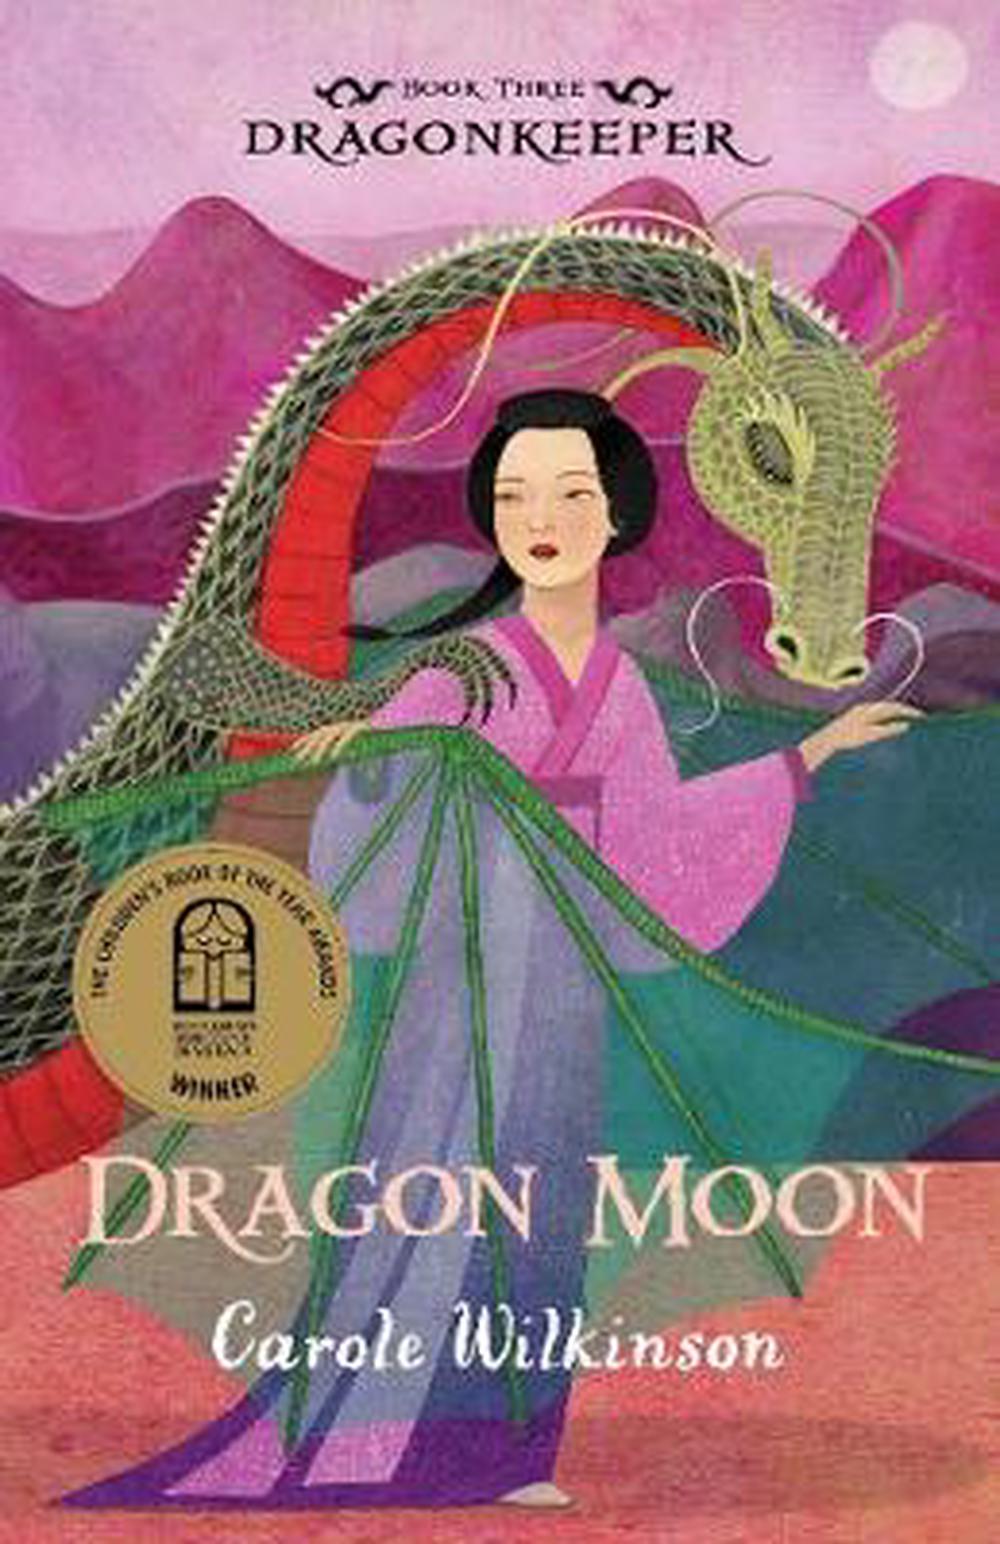 dragon keeper series by carole wilkinson